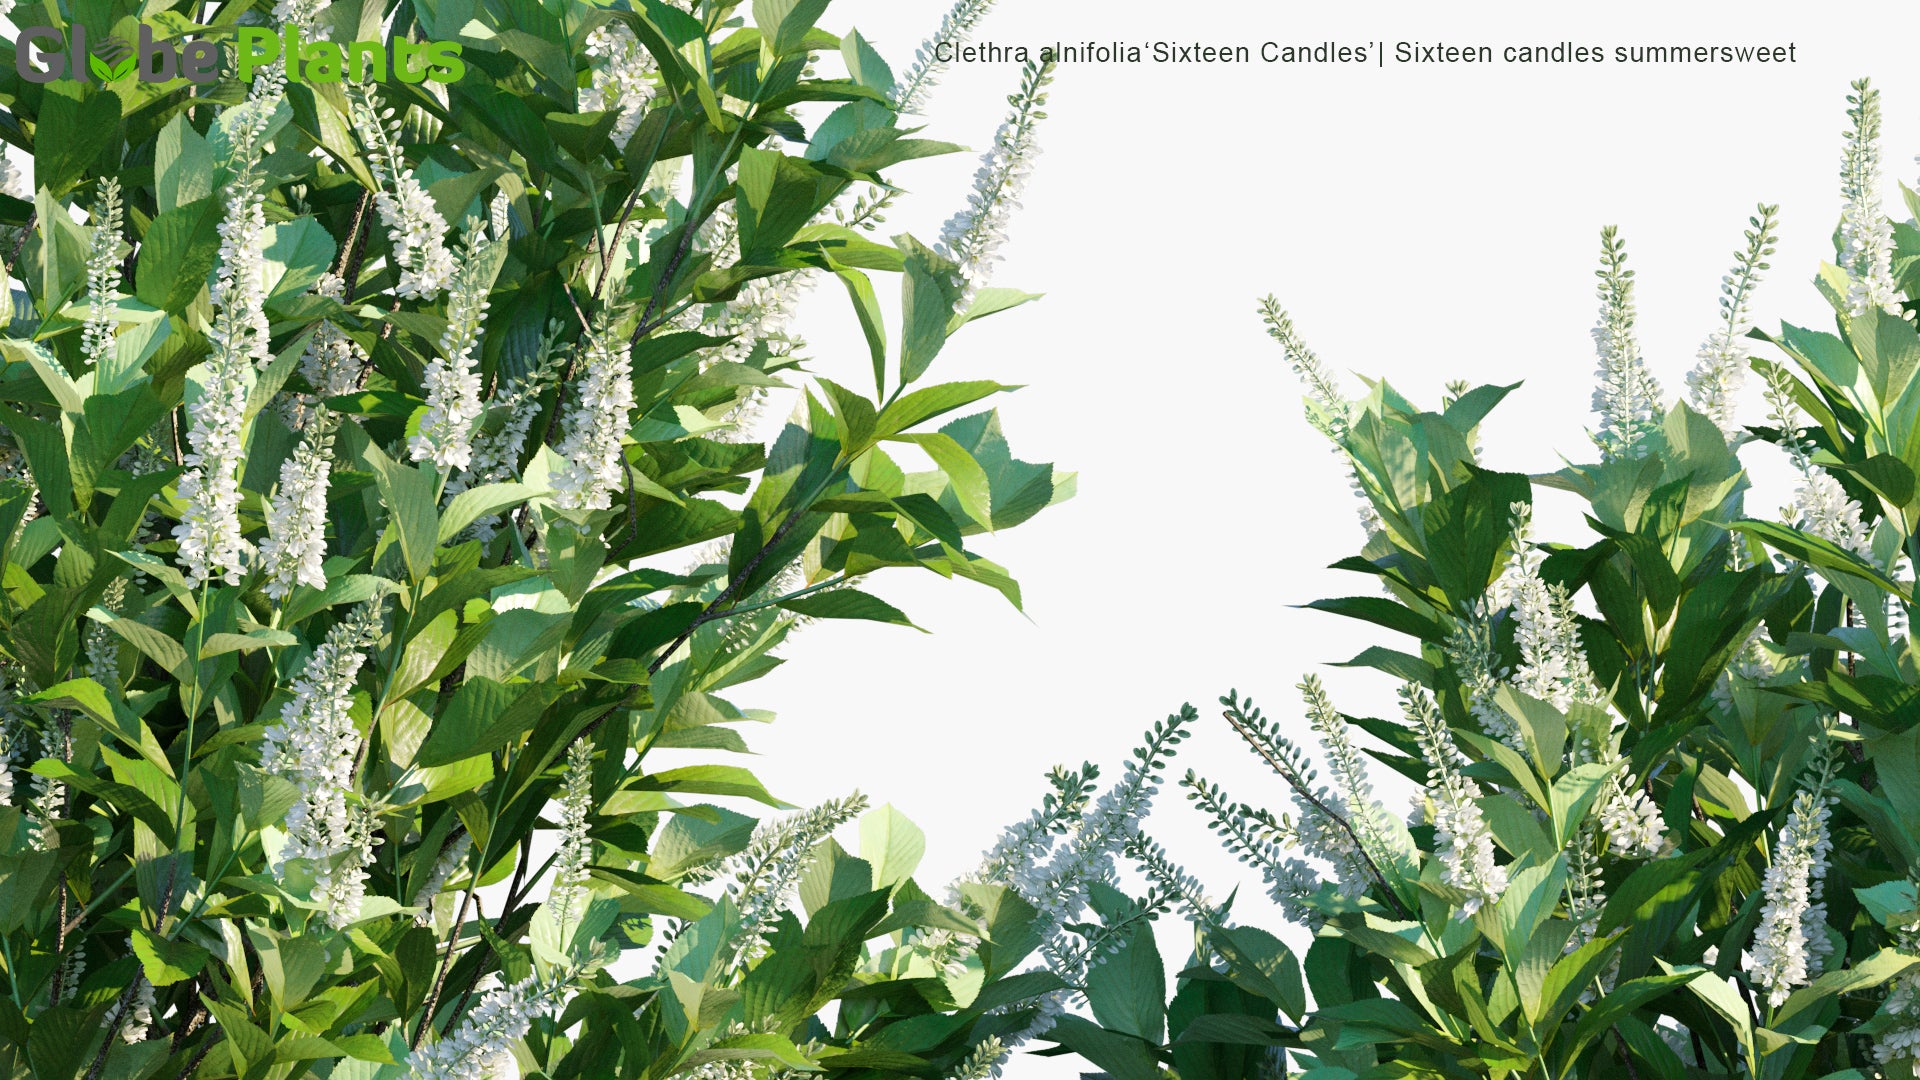 Clethra Alnifolia 'Sixteen Candles' - Sixteen Candles Summersweet